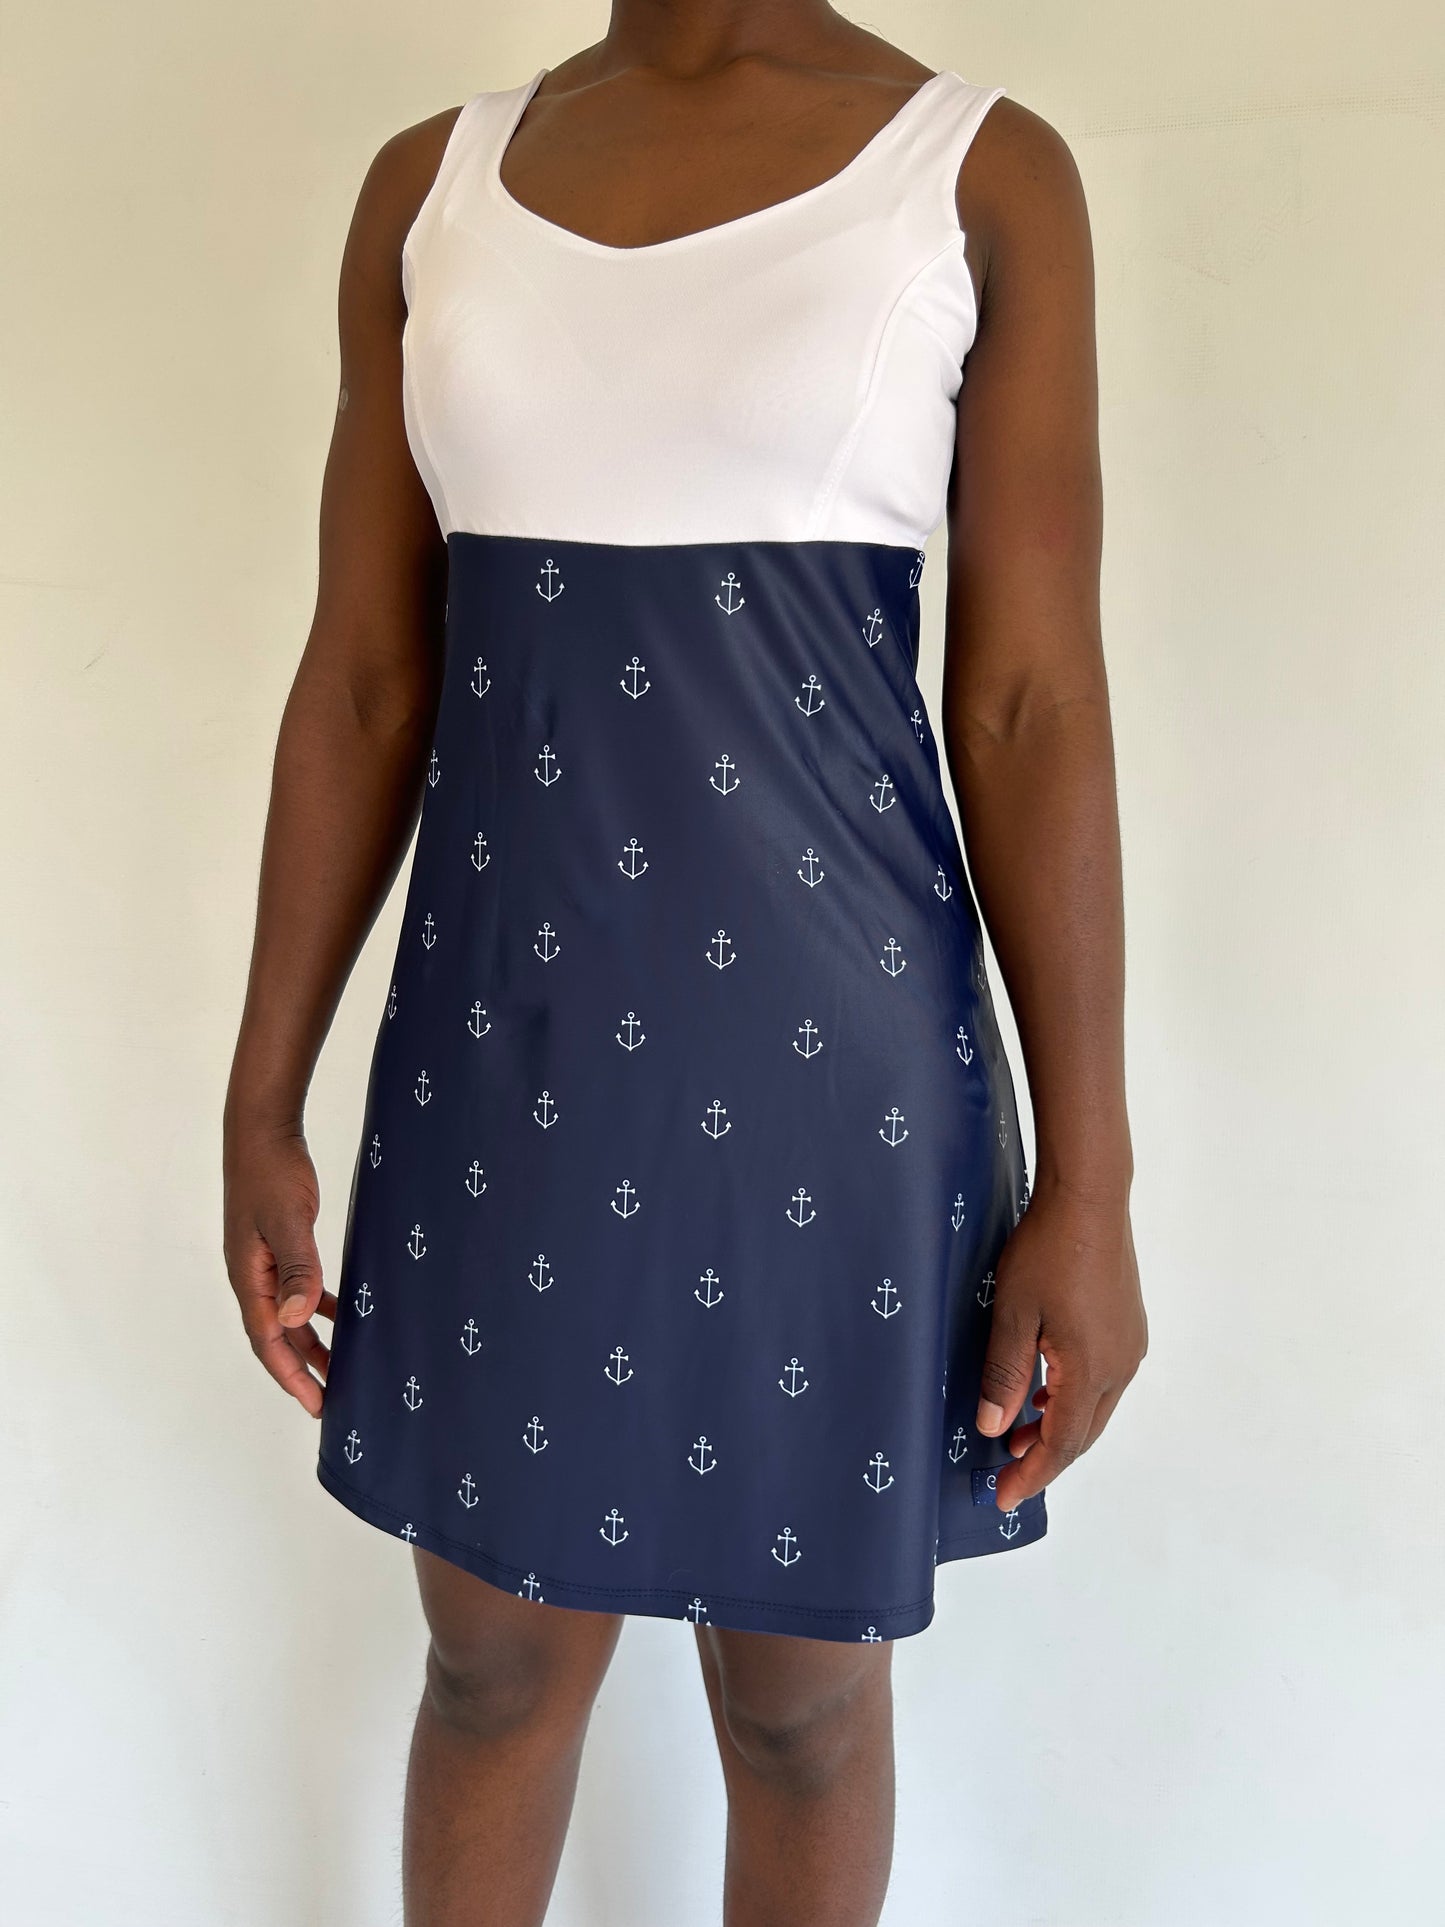 Anchor - Std Length dress